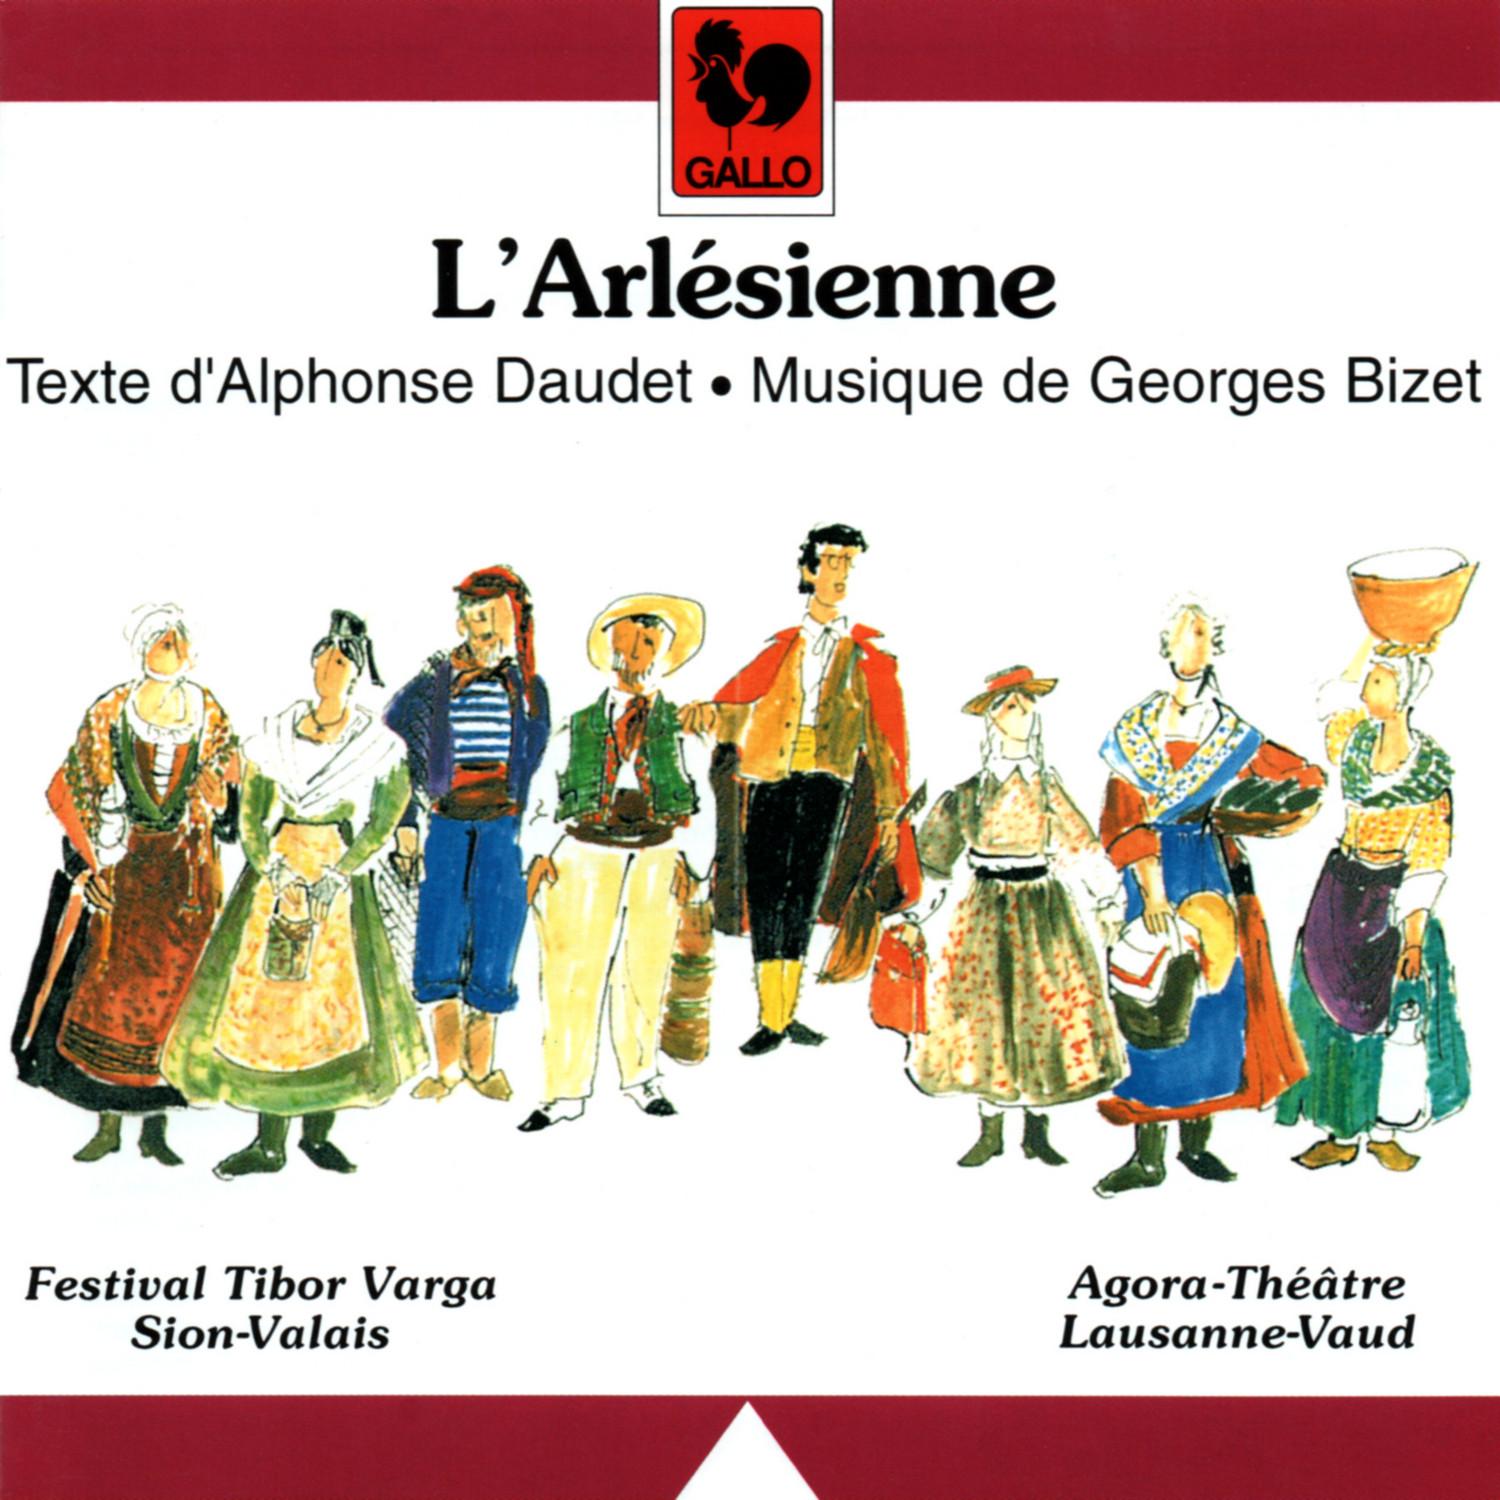 L'Arlésienne, Suite No. 2: II. Intermezzo